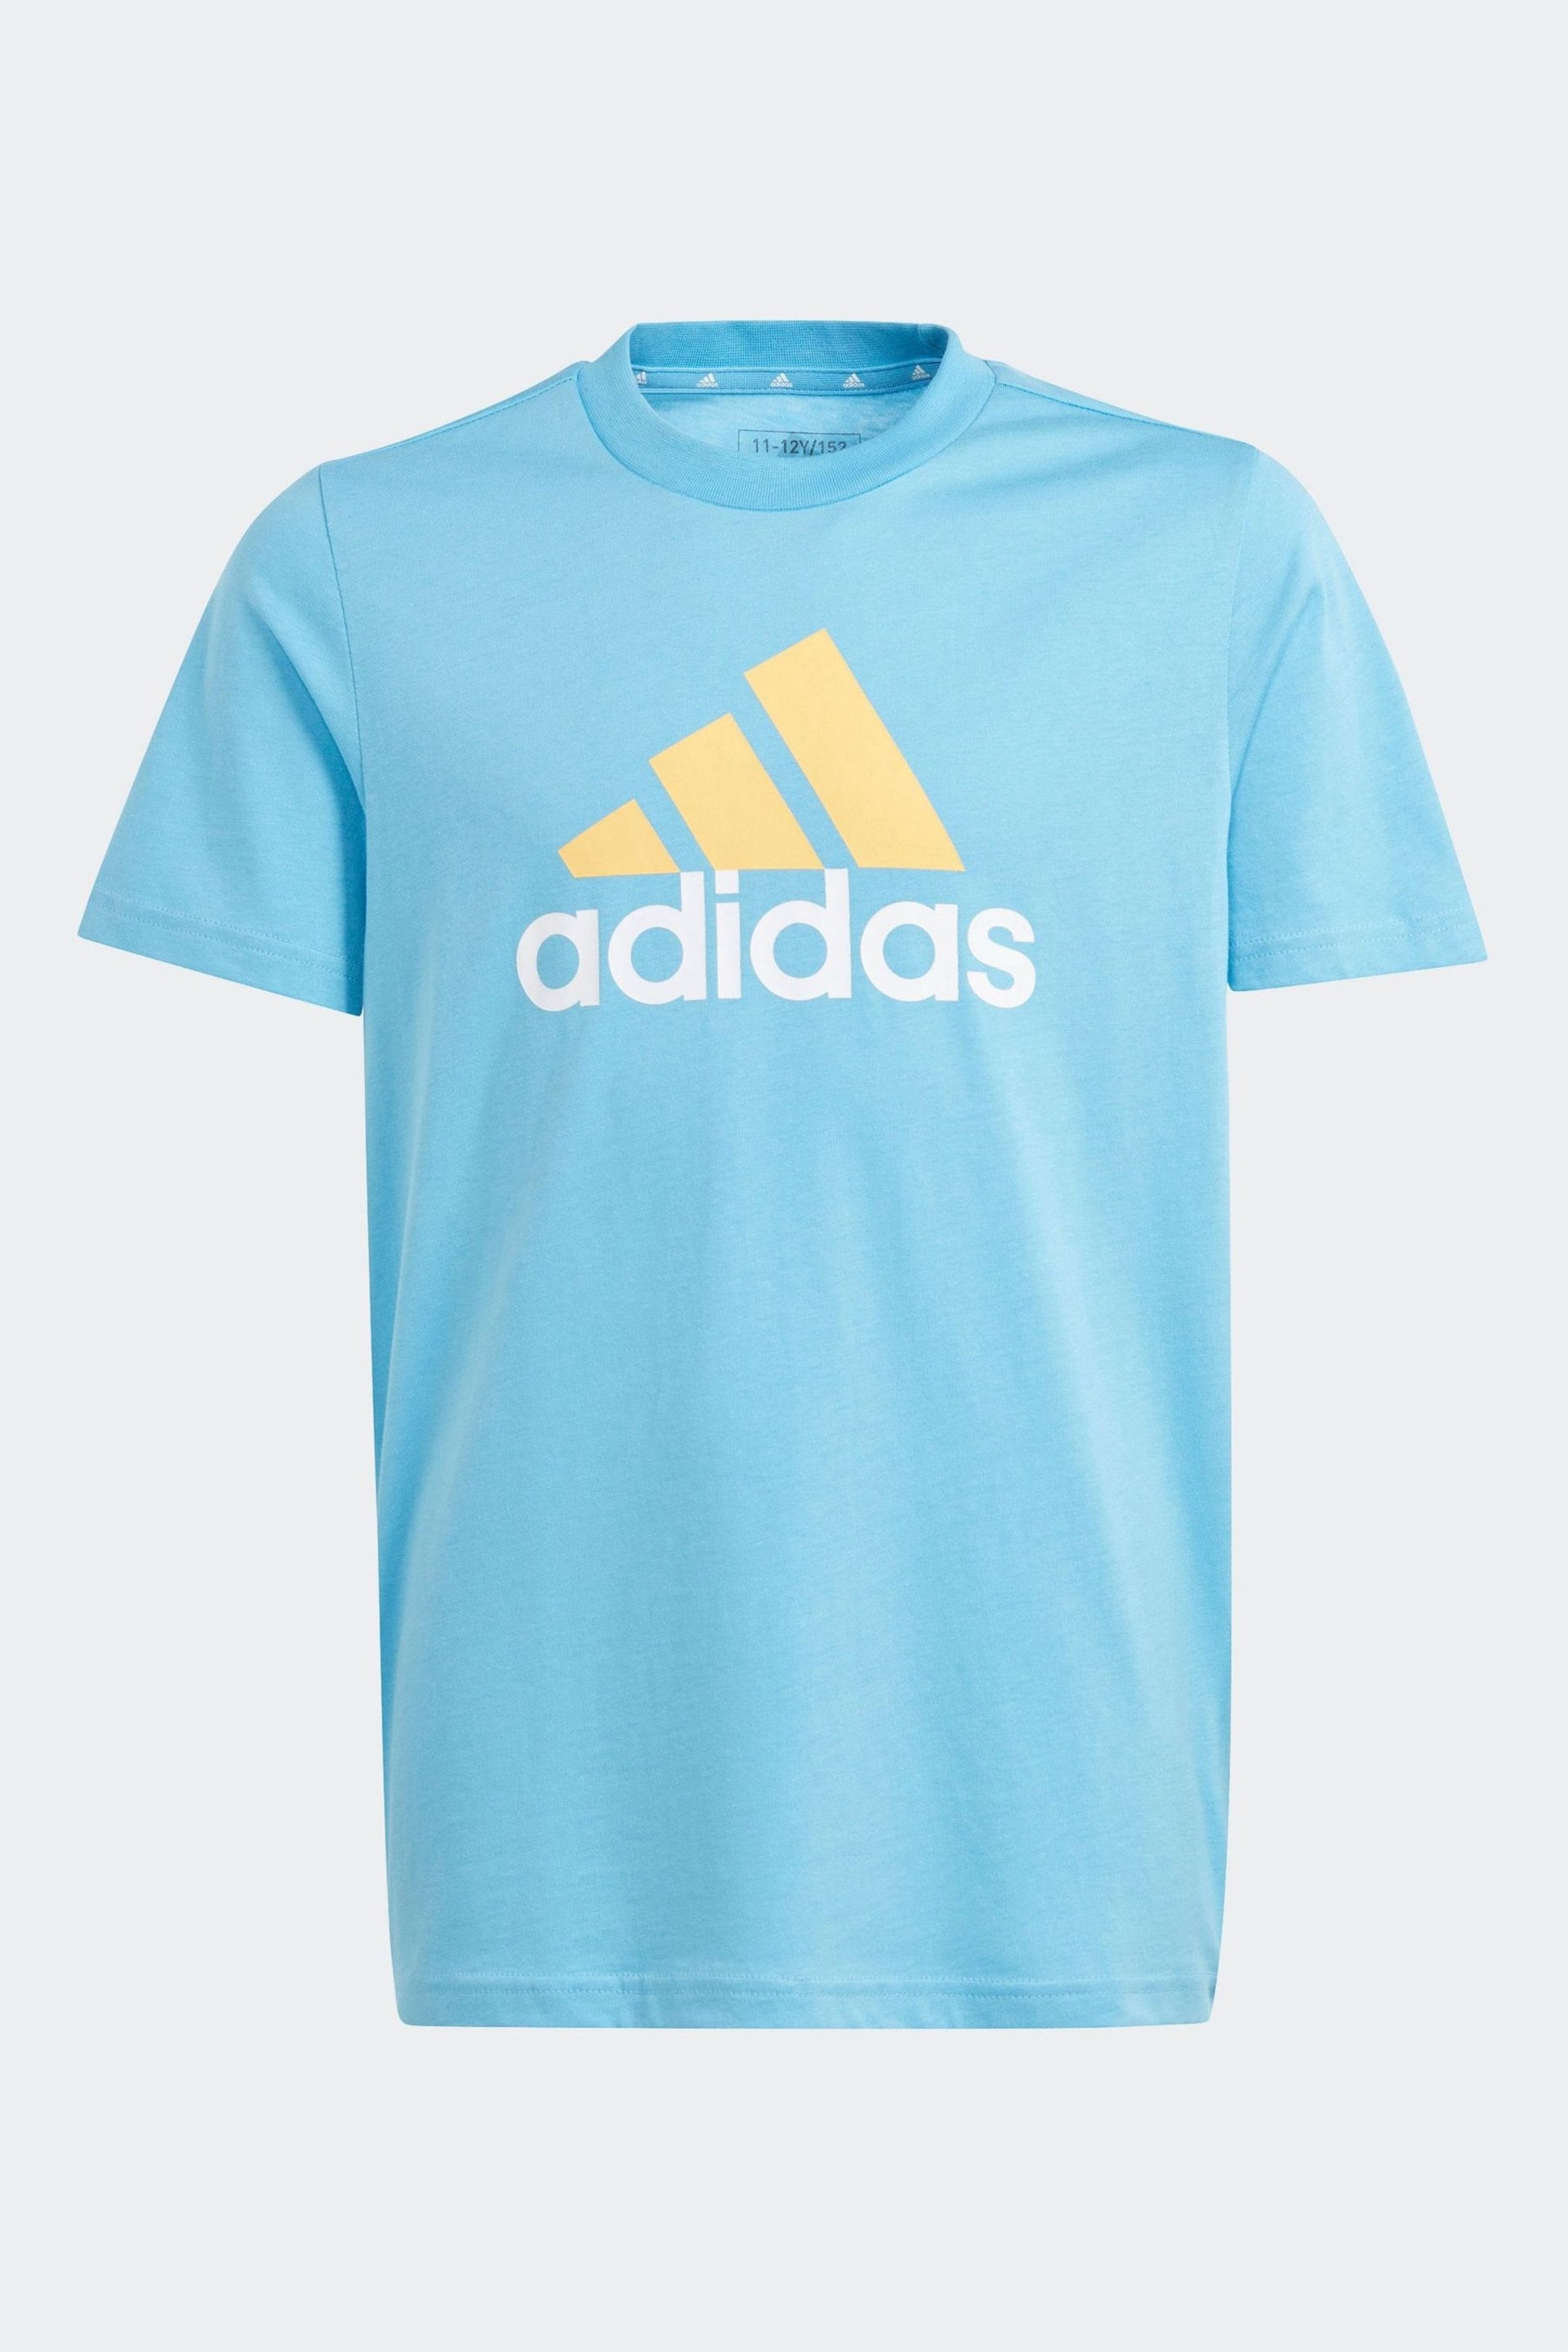 adidas Sky Blue Bold Logo T-Shirt - Image 1 of 5